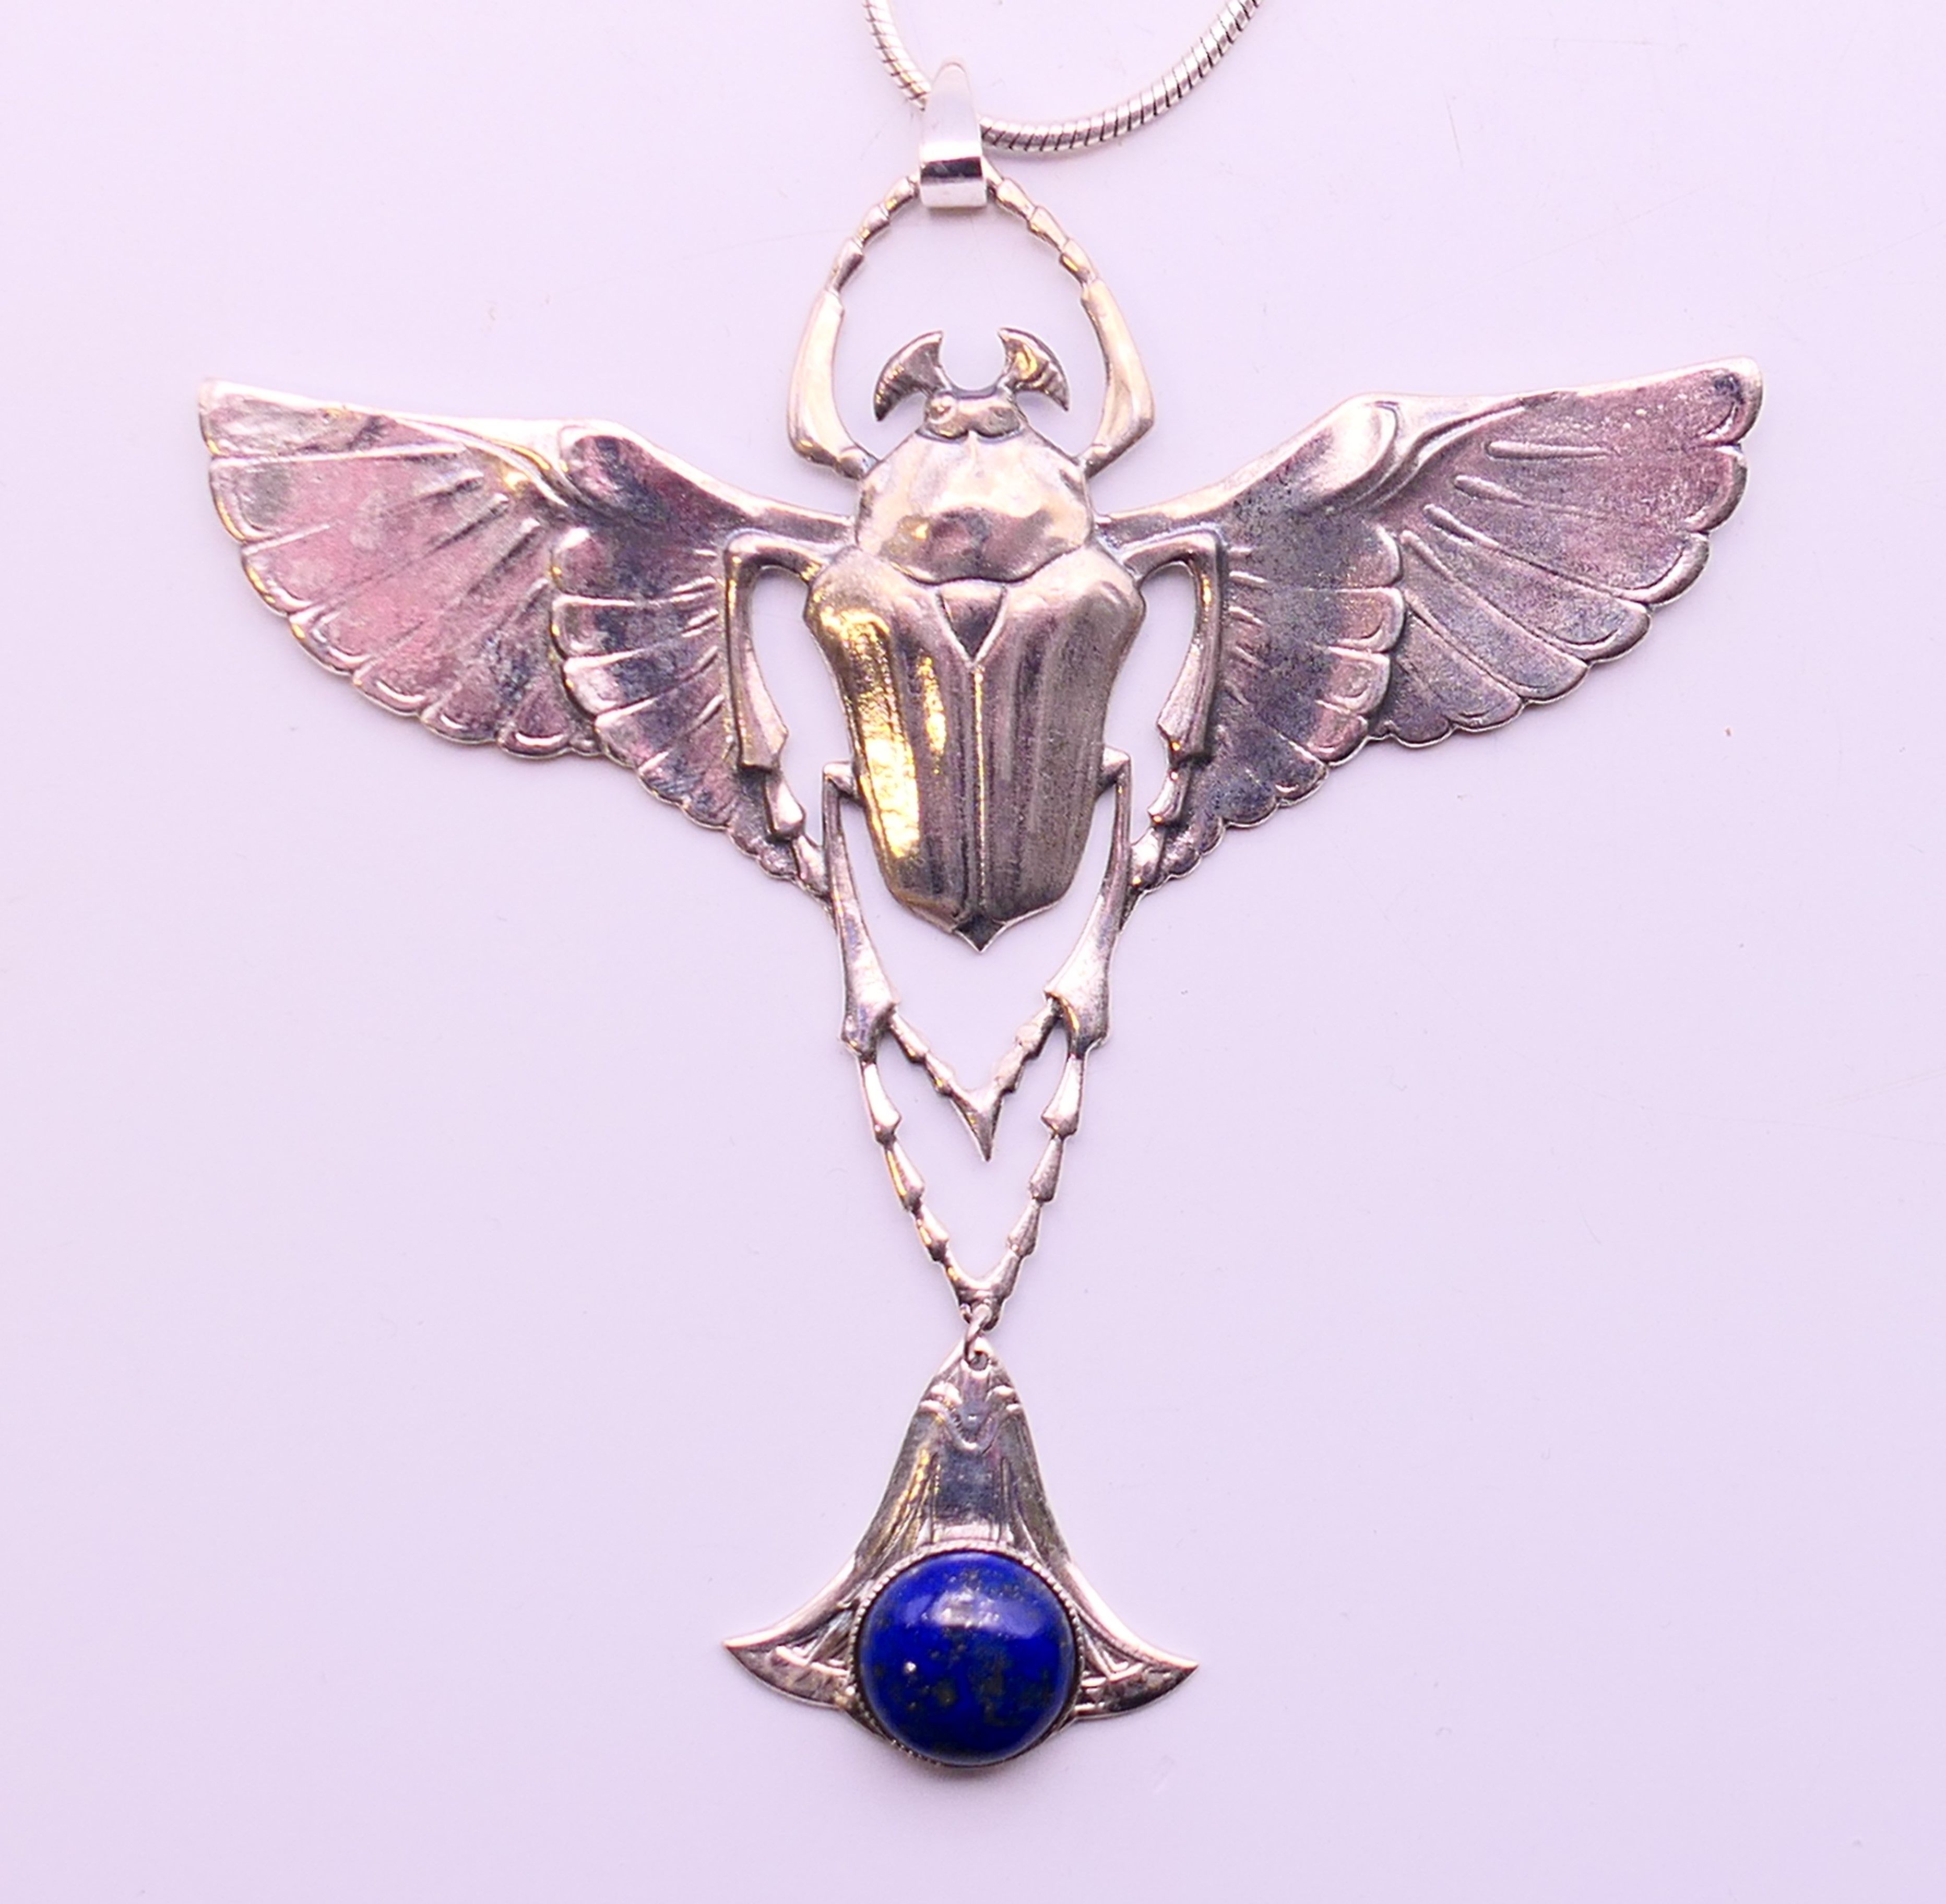 A silver and lapiz scarab pendant necklace. Pendant 9 cm high, chain 45 cm long.